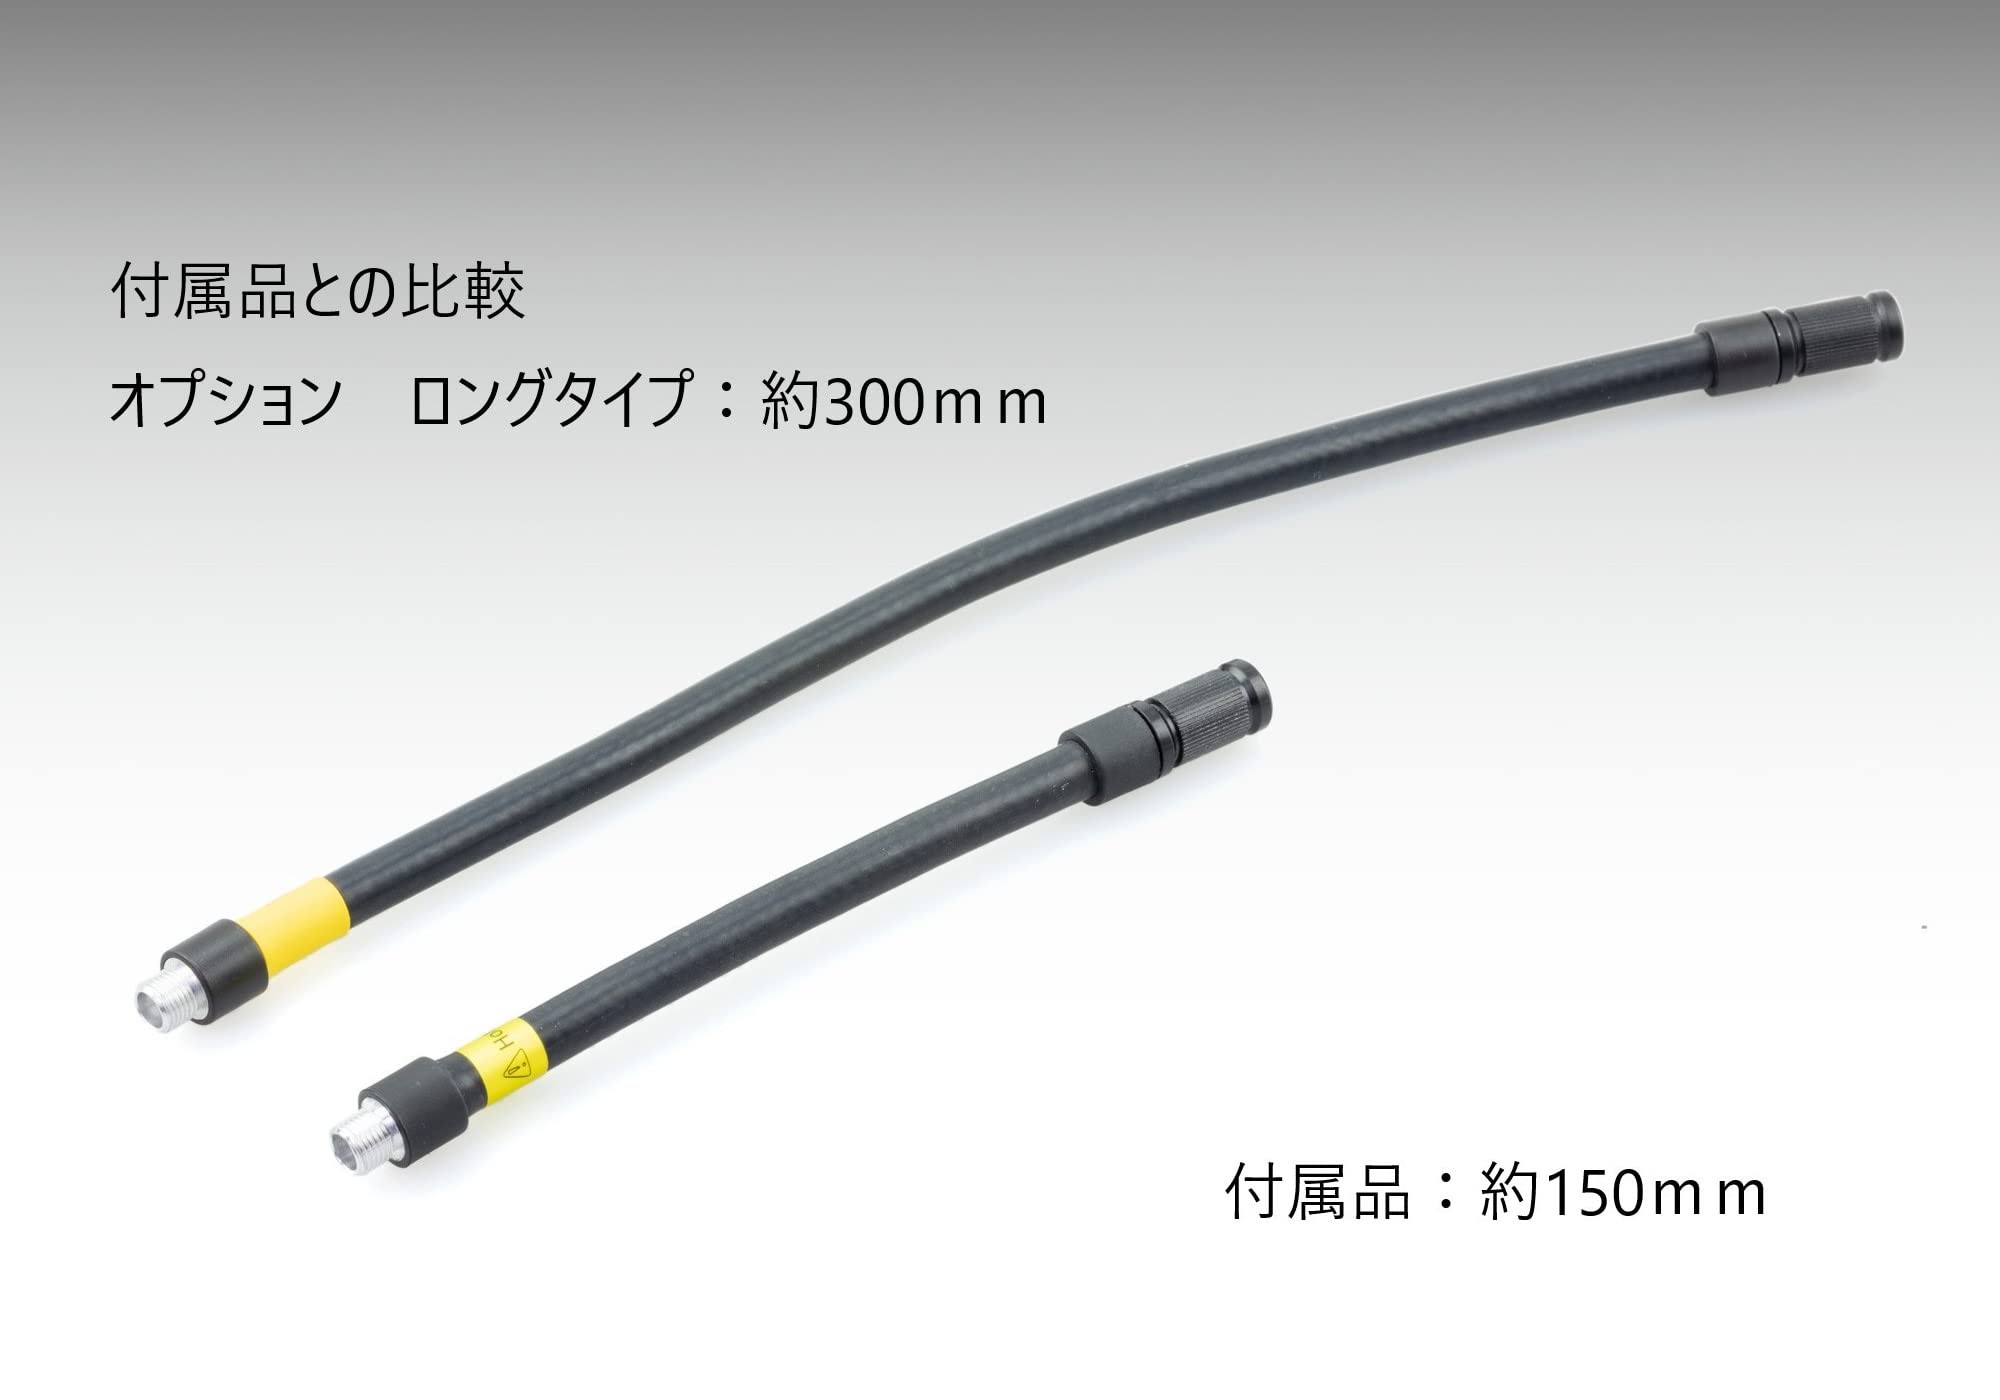  Kijima (Kijima) bike air pump extension hose long air hose option Smart air pump JP01 300mm 302-322-7bla